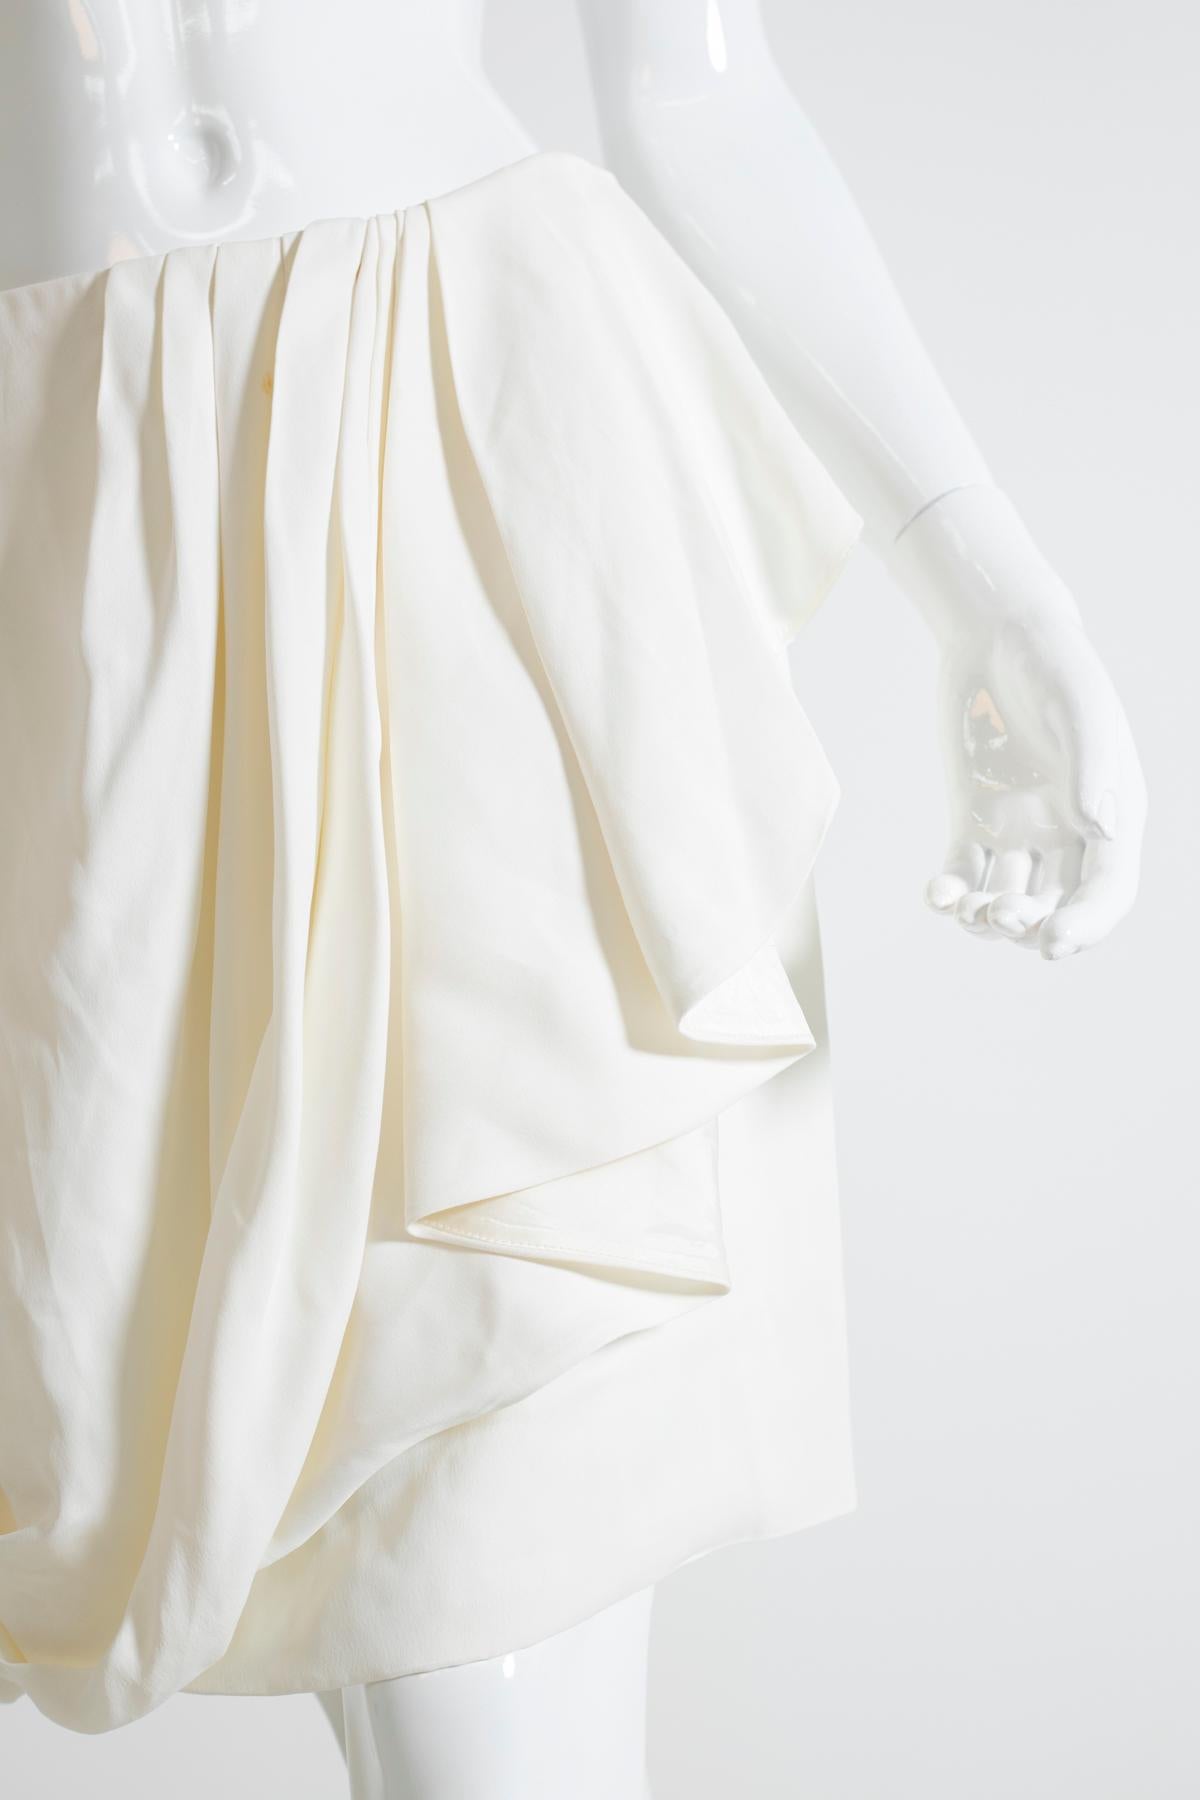 Gray Emanuel Ungaro White Silk Satin Skirt with Ruffle For Sale